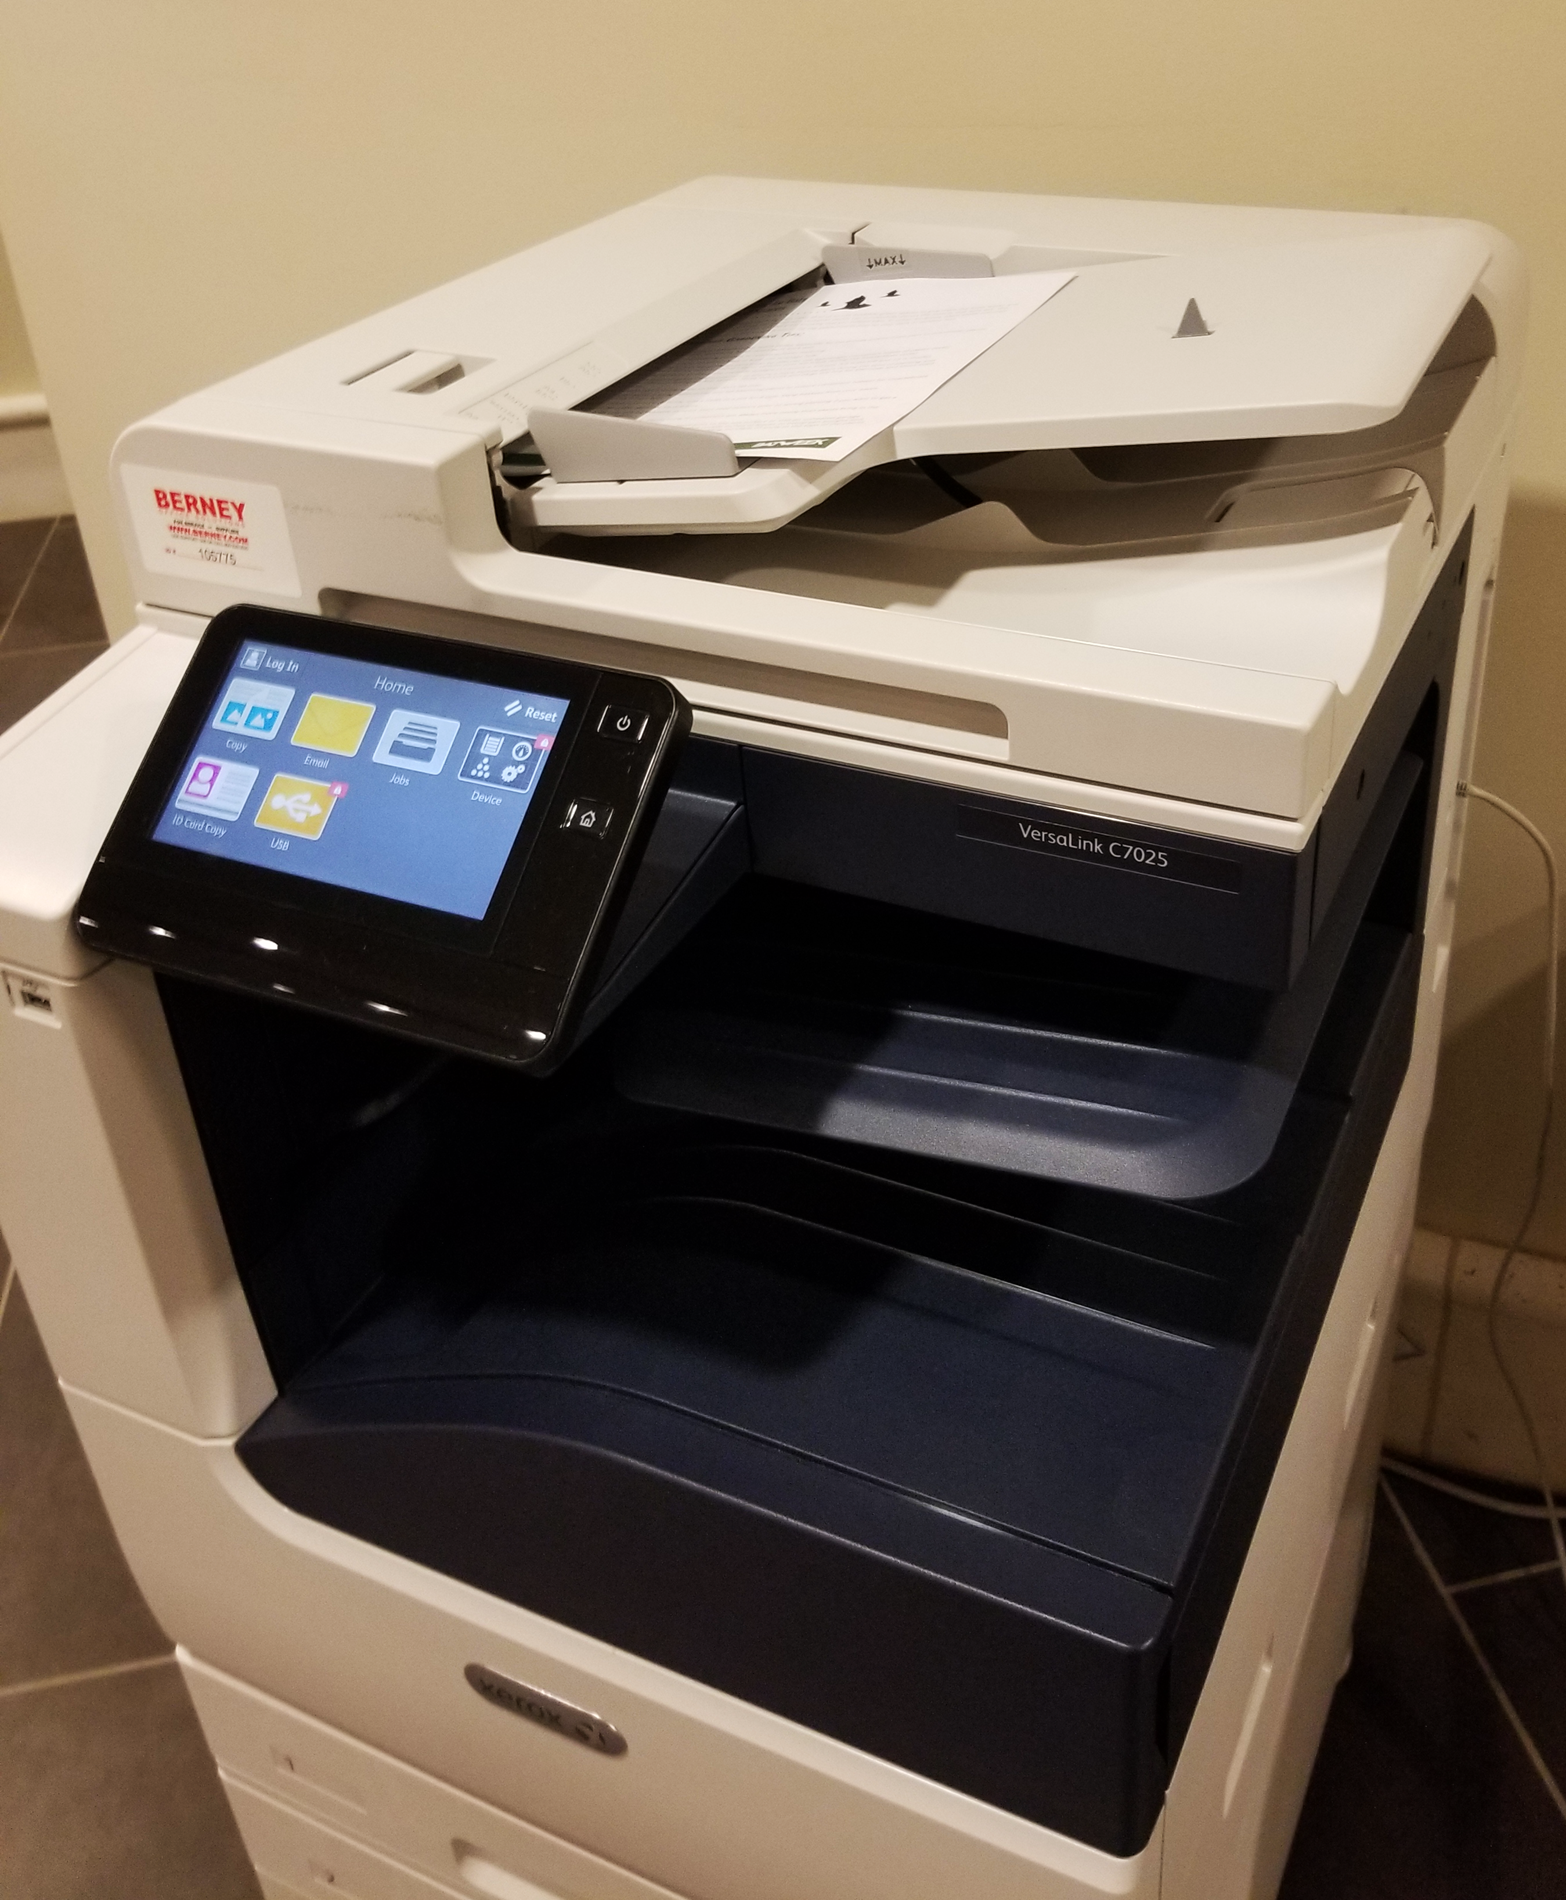 Document feeder on SFPL's Xerox printer